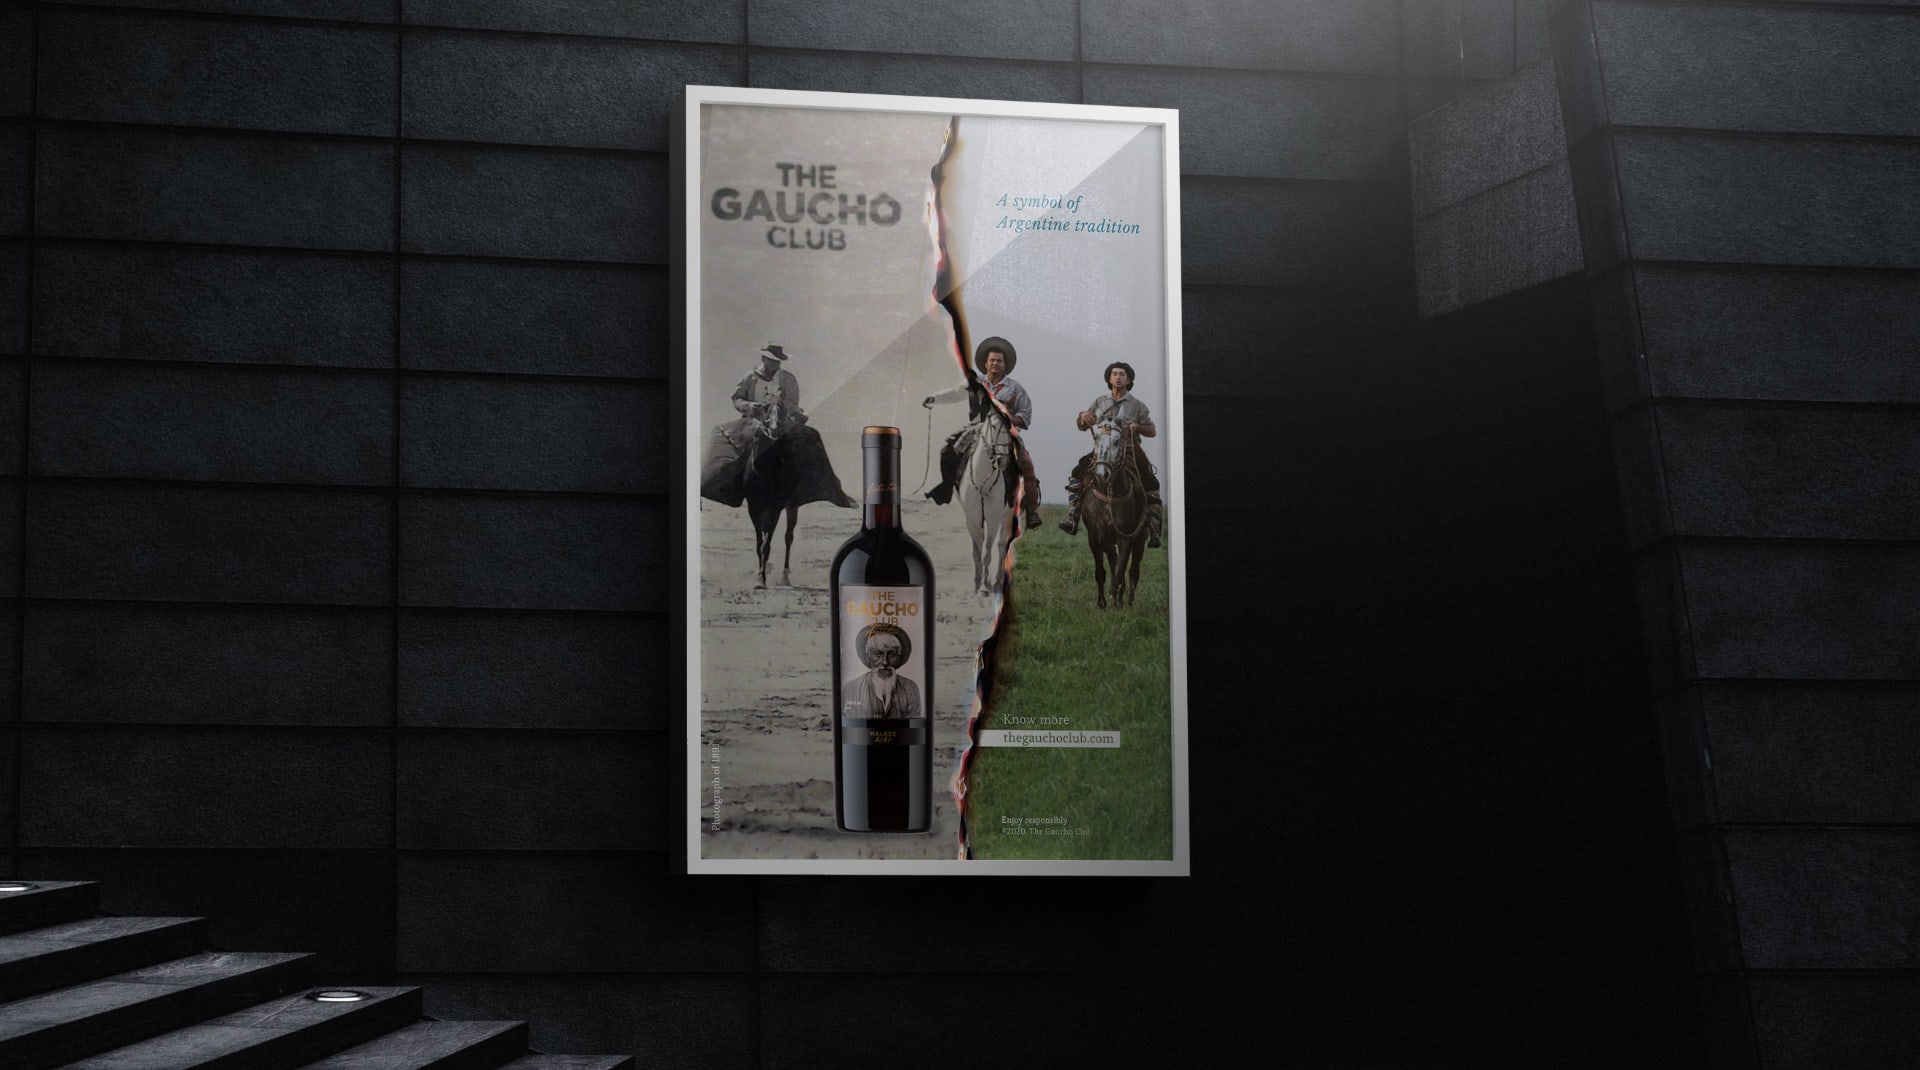 The Gaucho Club poster